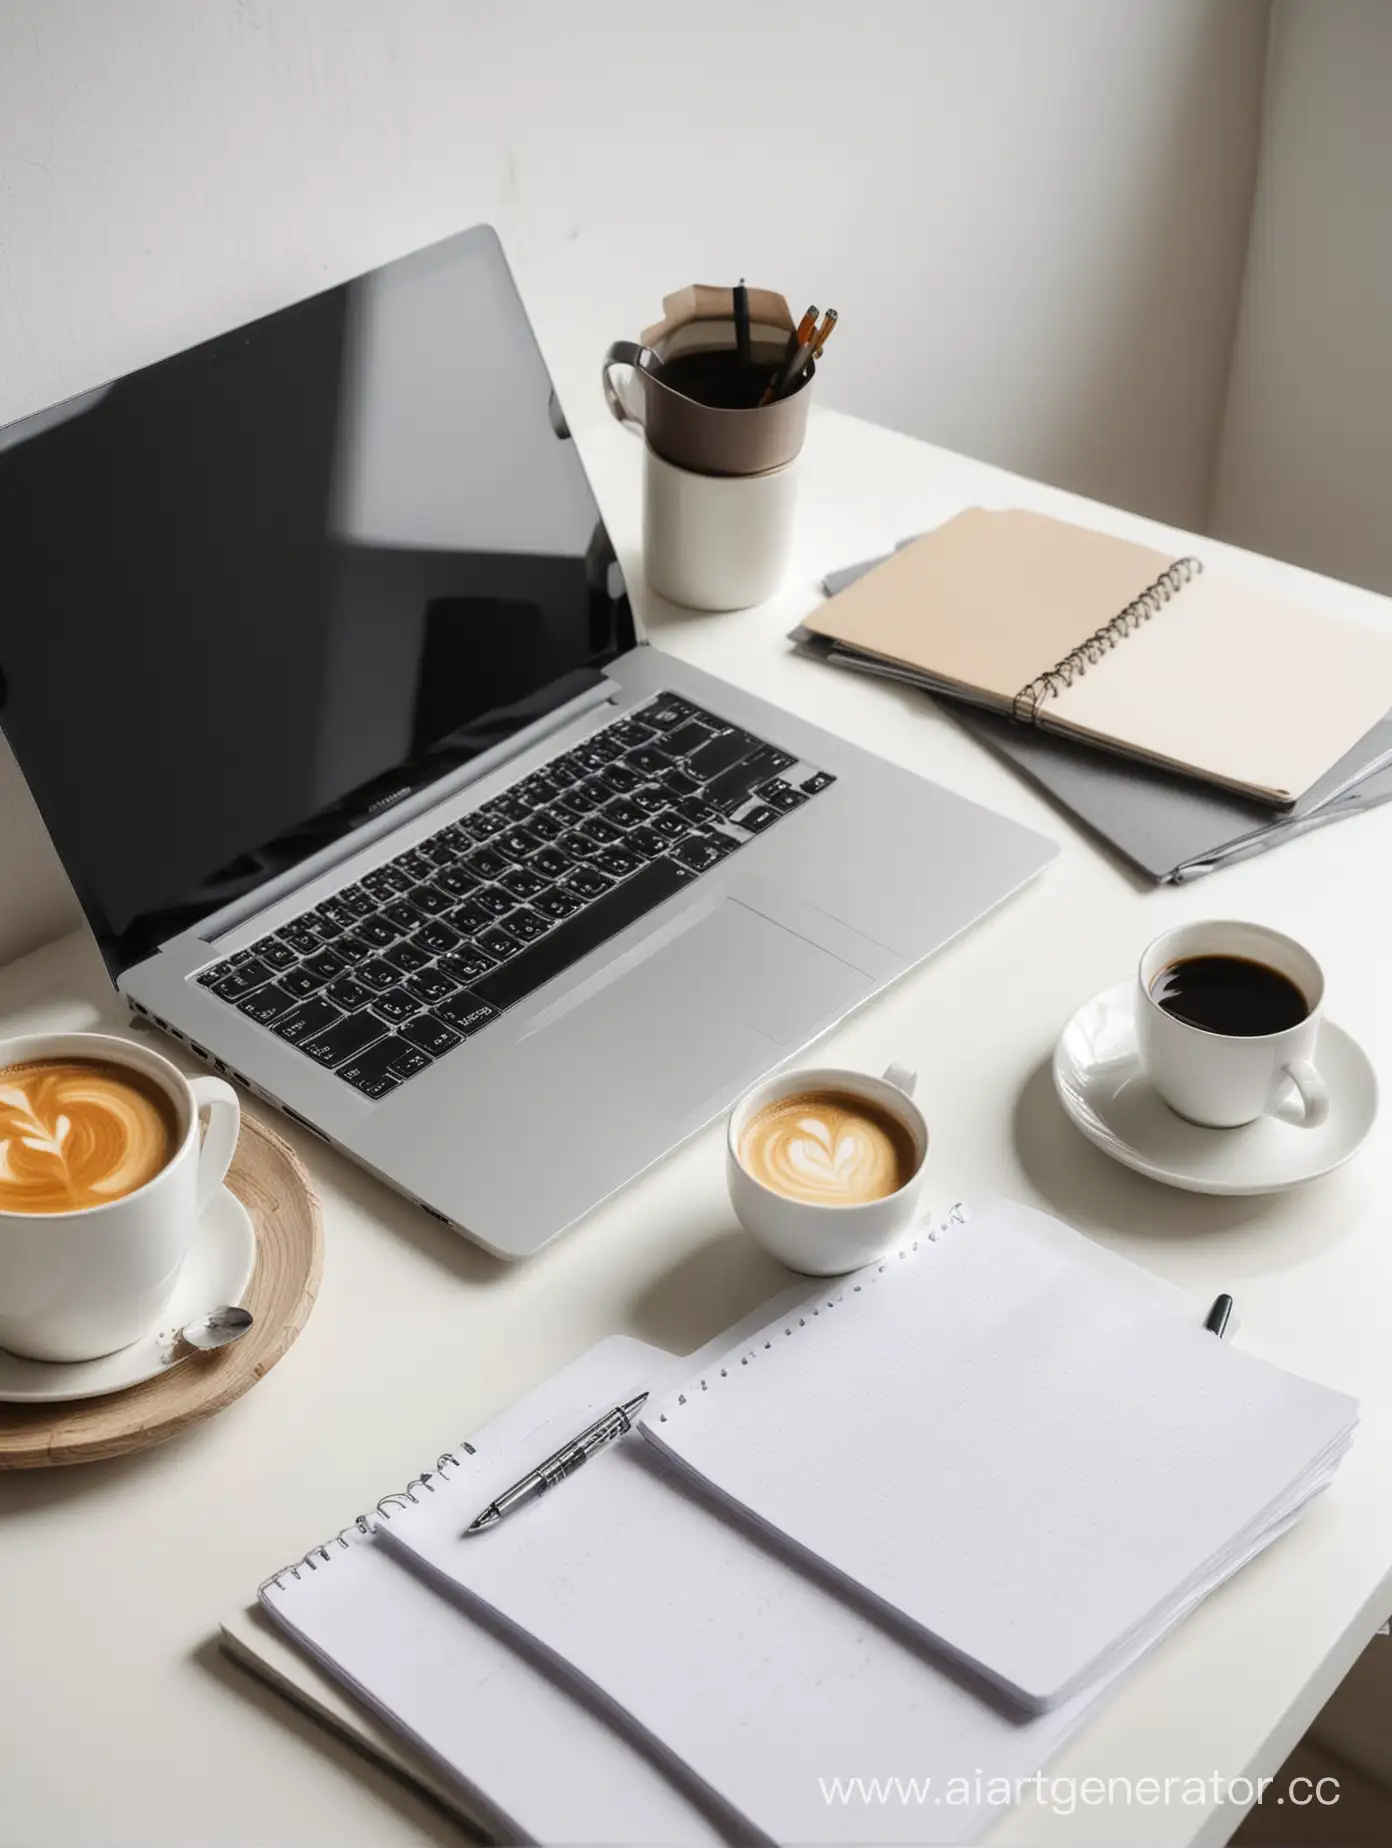 Стакан с кофе, ноутбук, приложение, дизайн, работа, эстетика, стол, светлая комната

